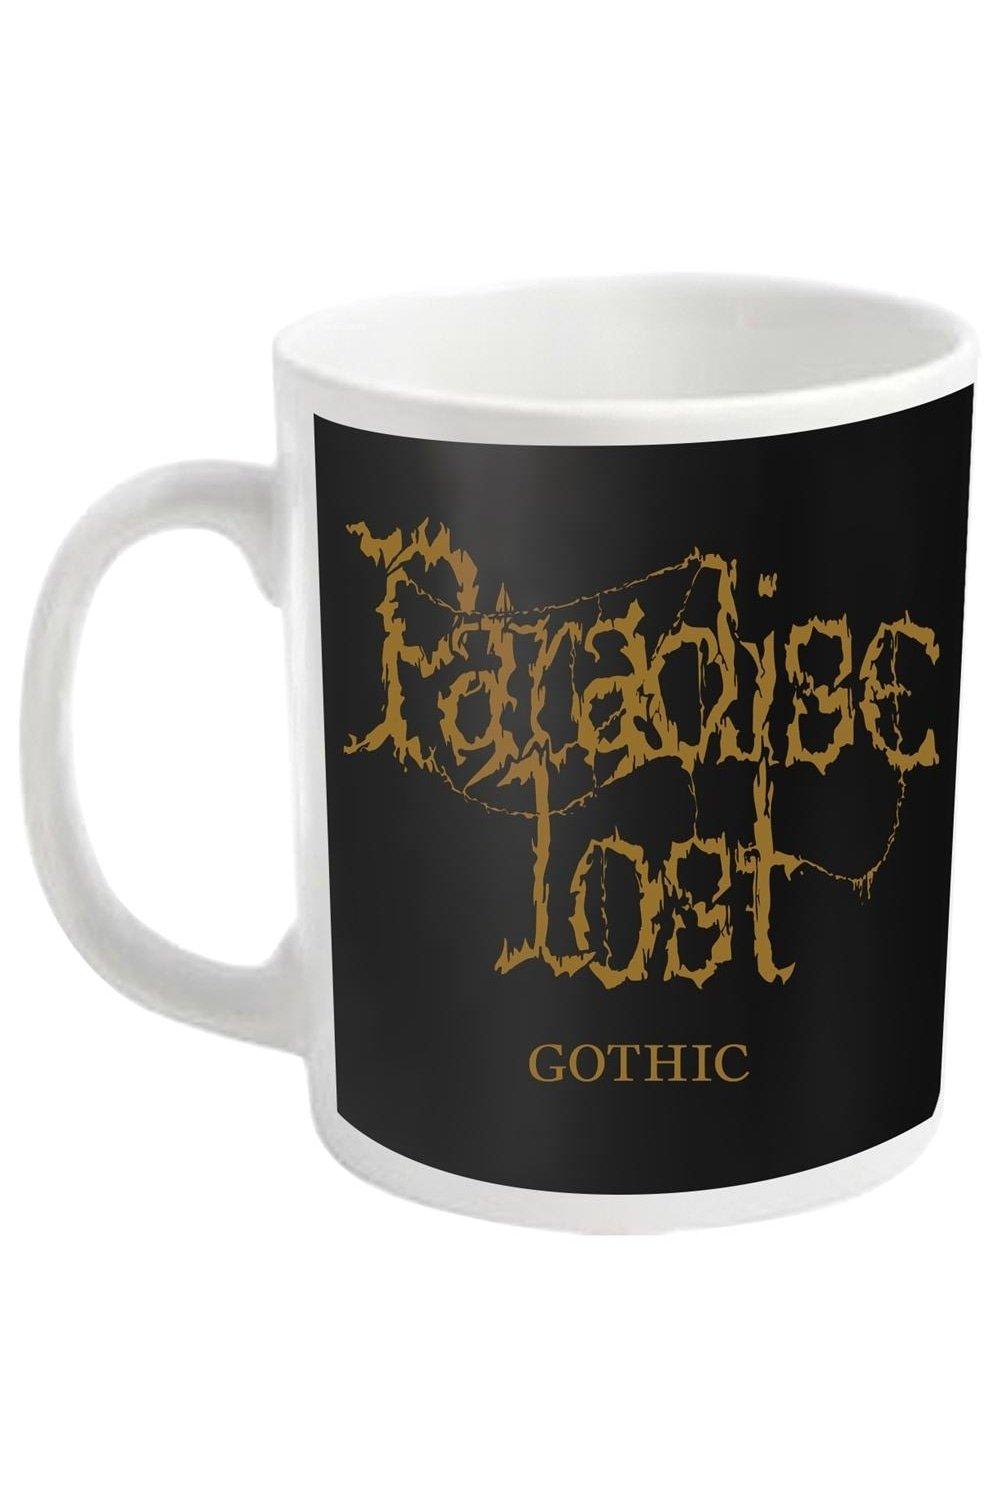 Photos - Mug / Cup Gothic Mug